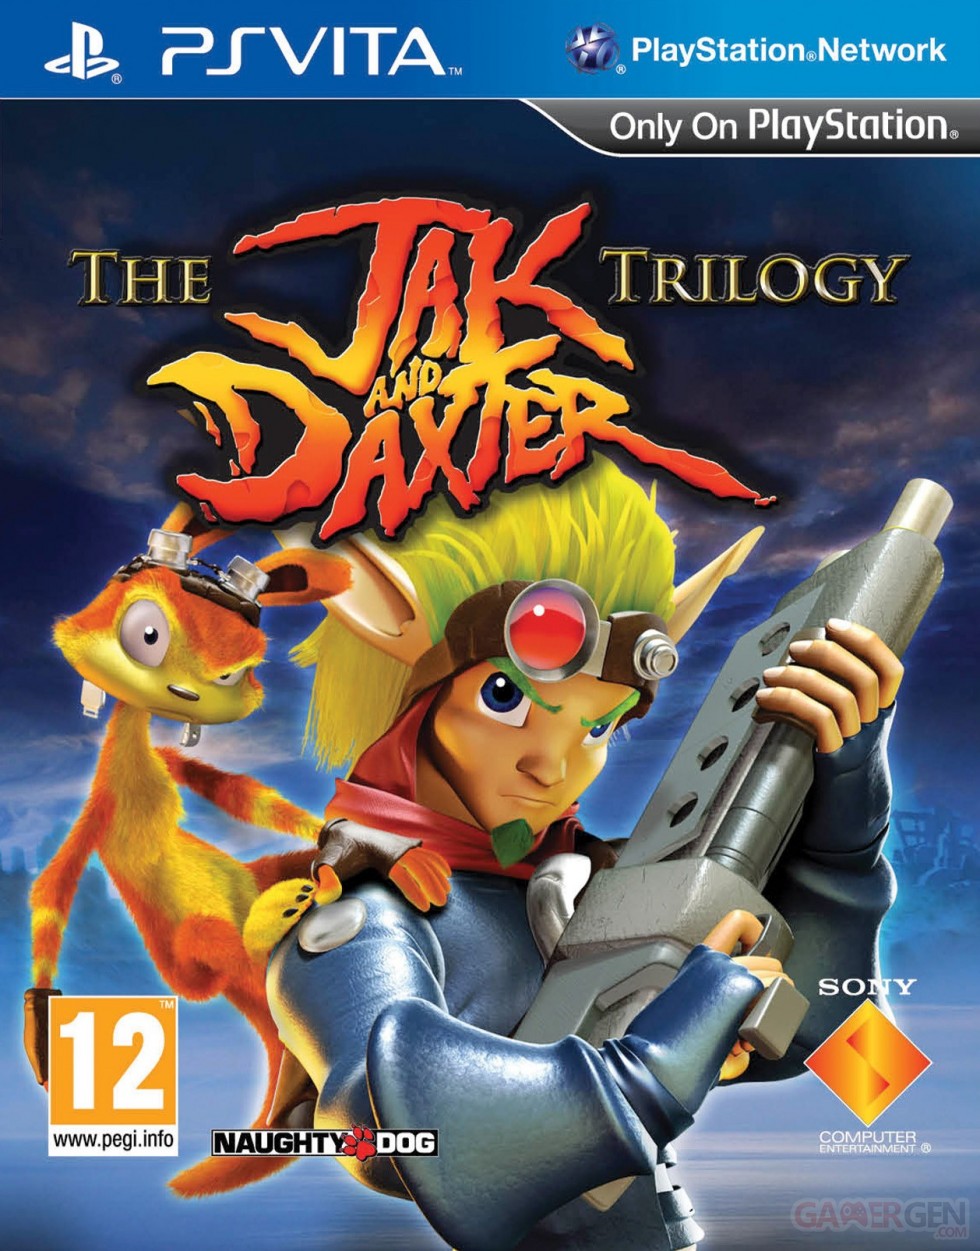 Jak and Daxter Trilogy jaquette psvita 29.05.2013.